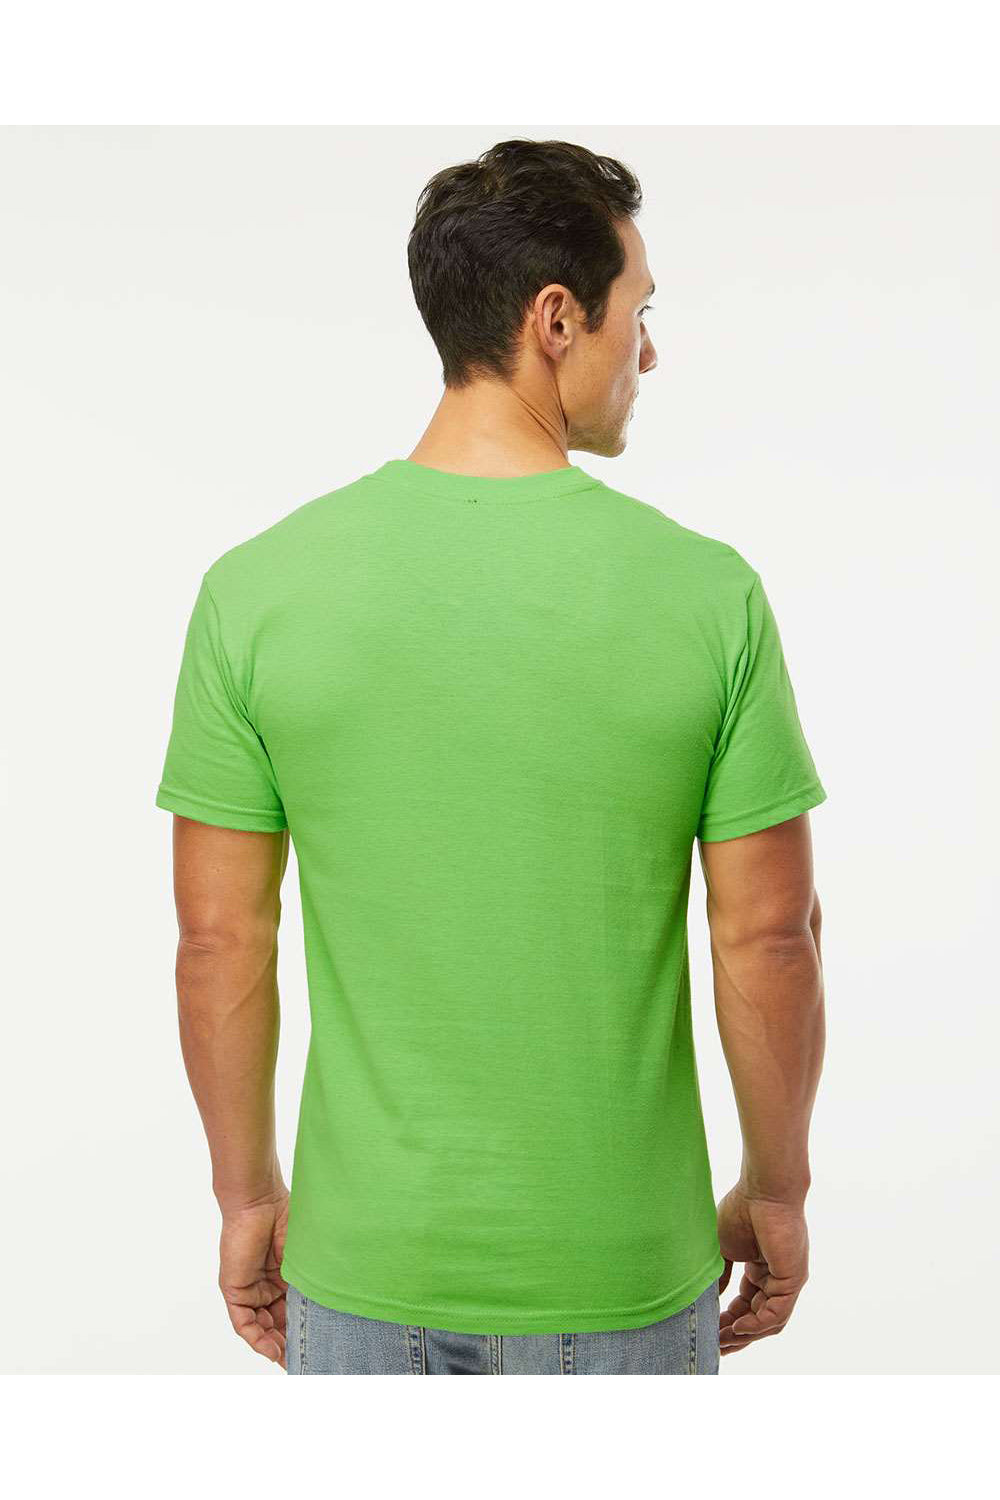 M&O 4800 Mens Gold Soft Touch Short Sleeve Crewneck T-Shirt Vivid Lime Green Model Back